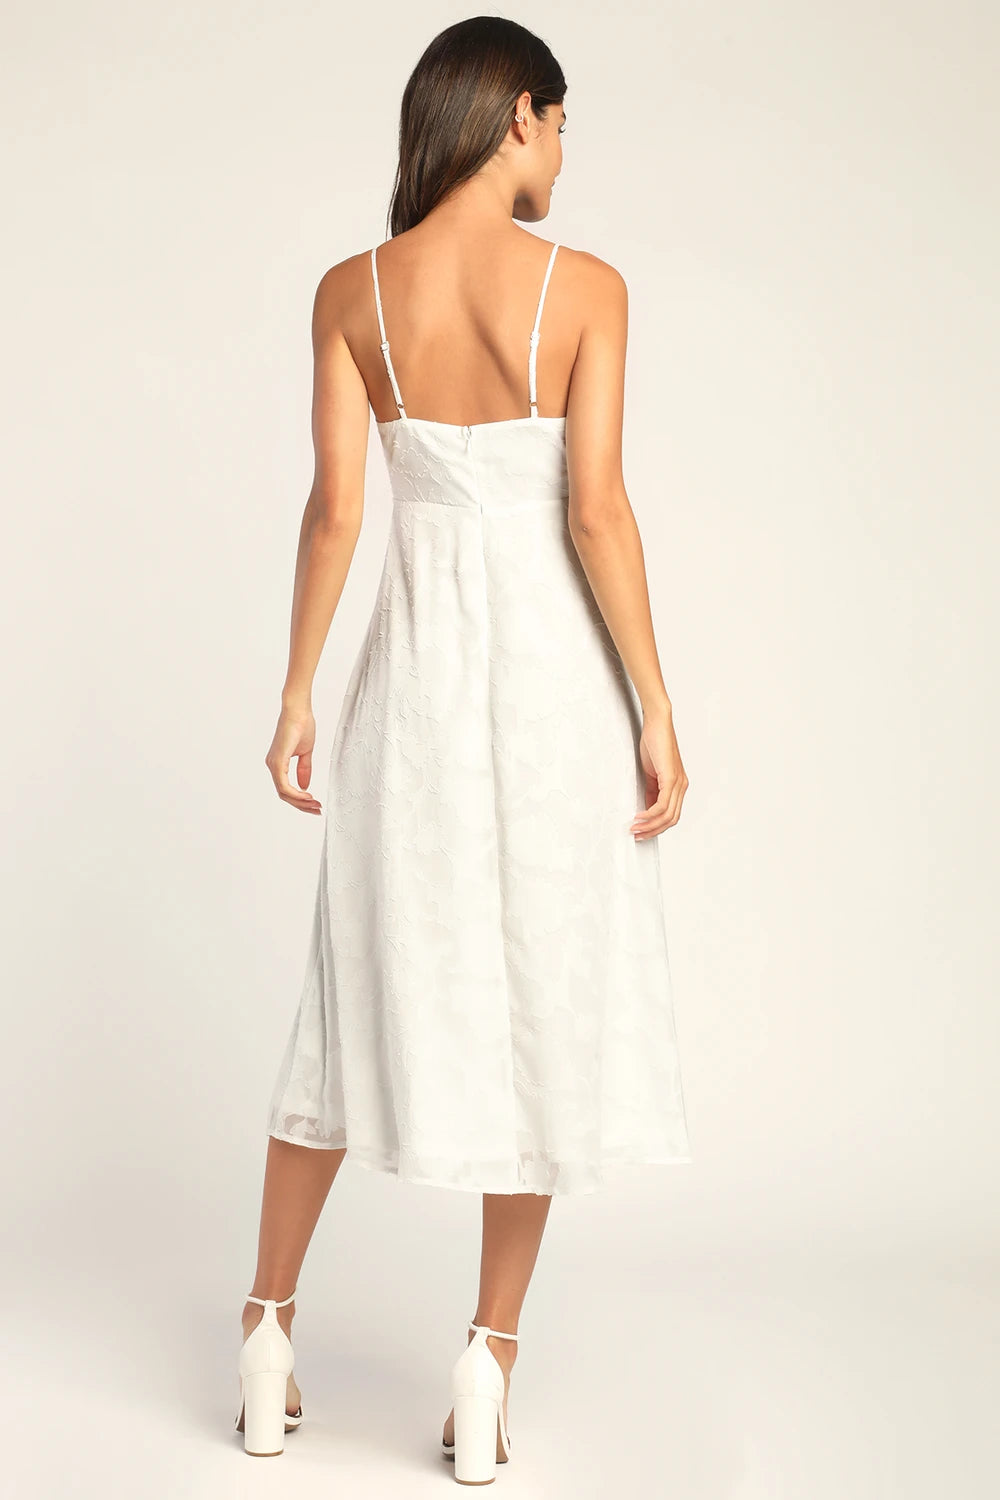 Lulus White Floral Burnout Surplice Midi Dress - XS